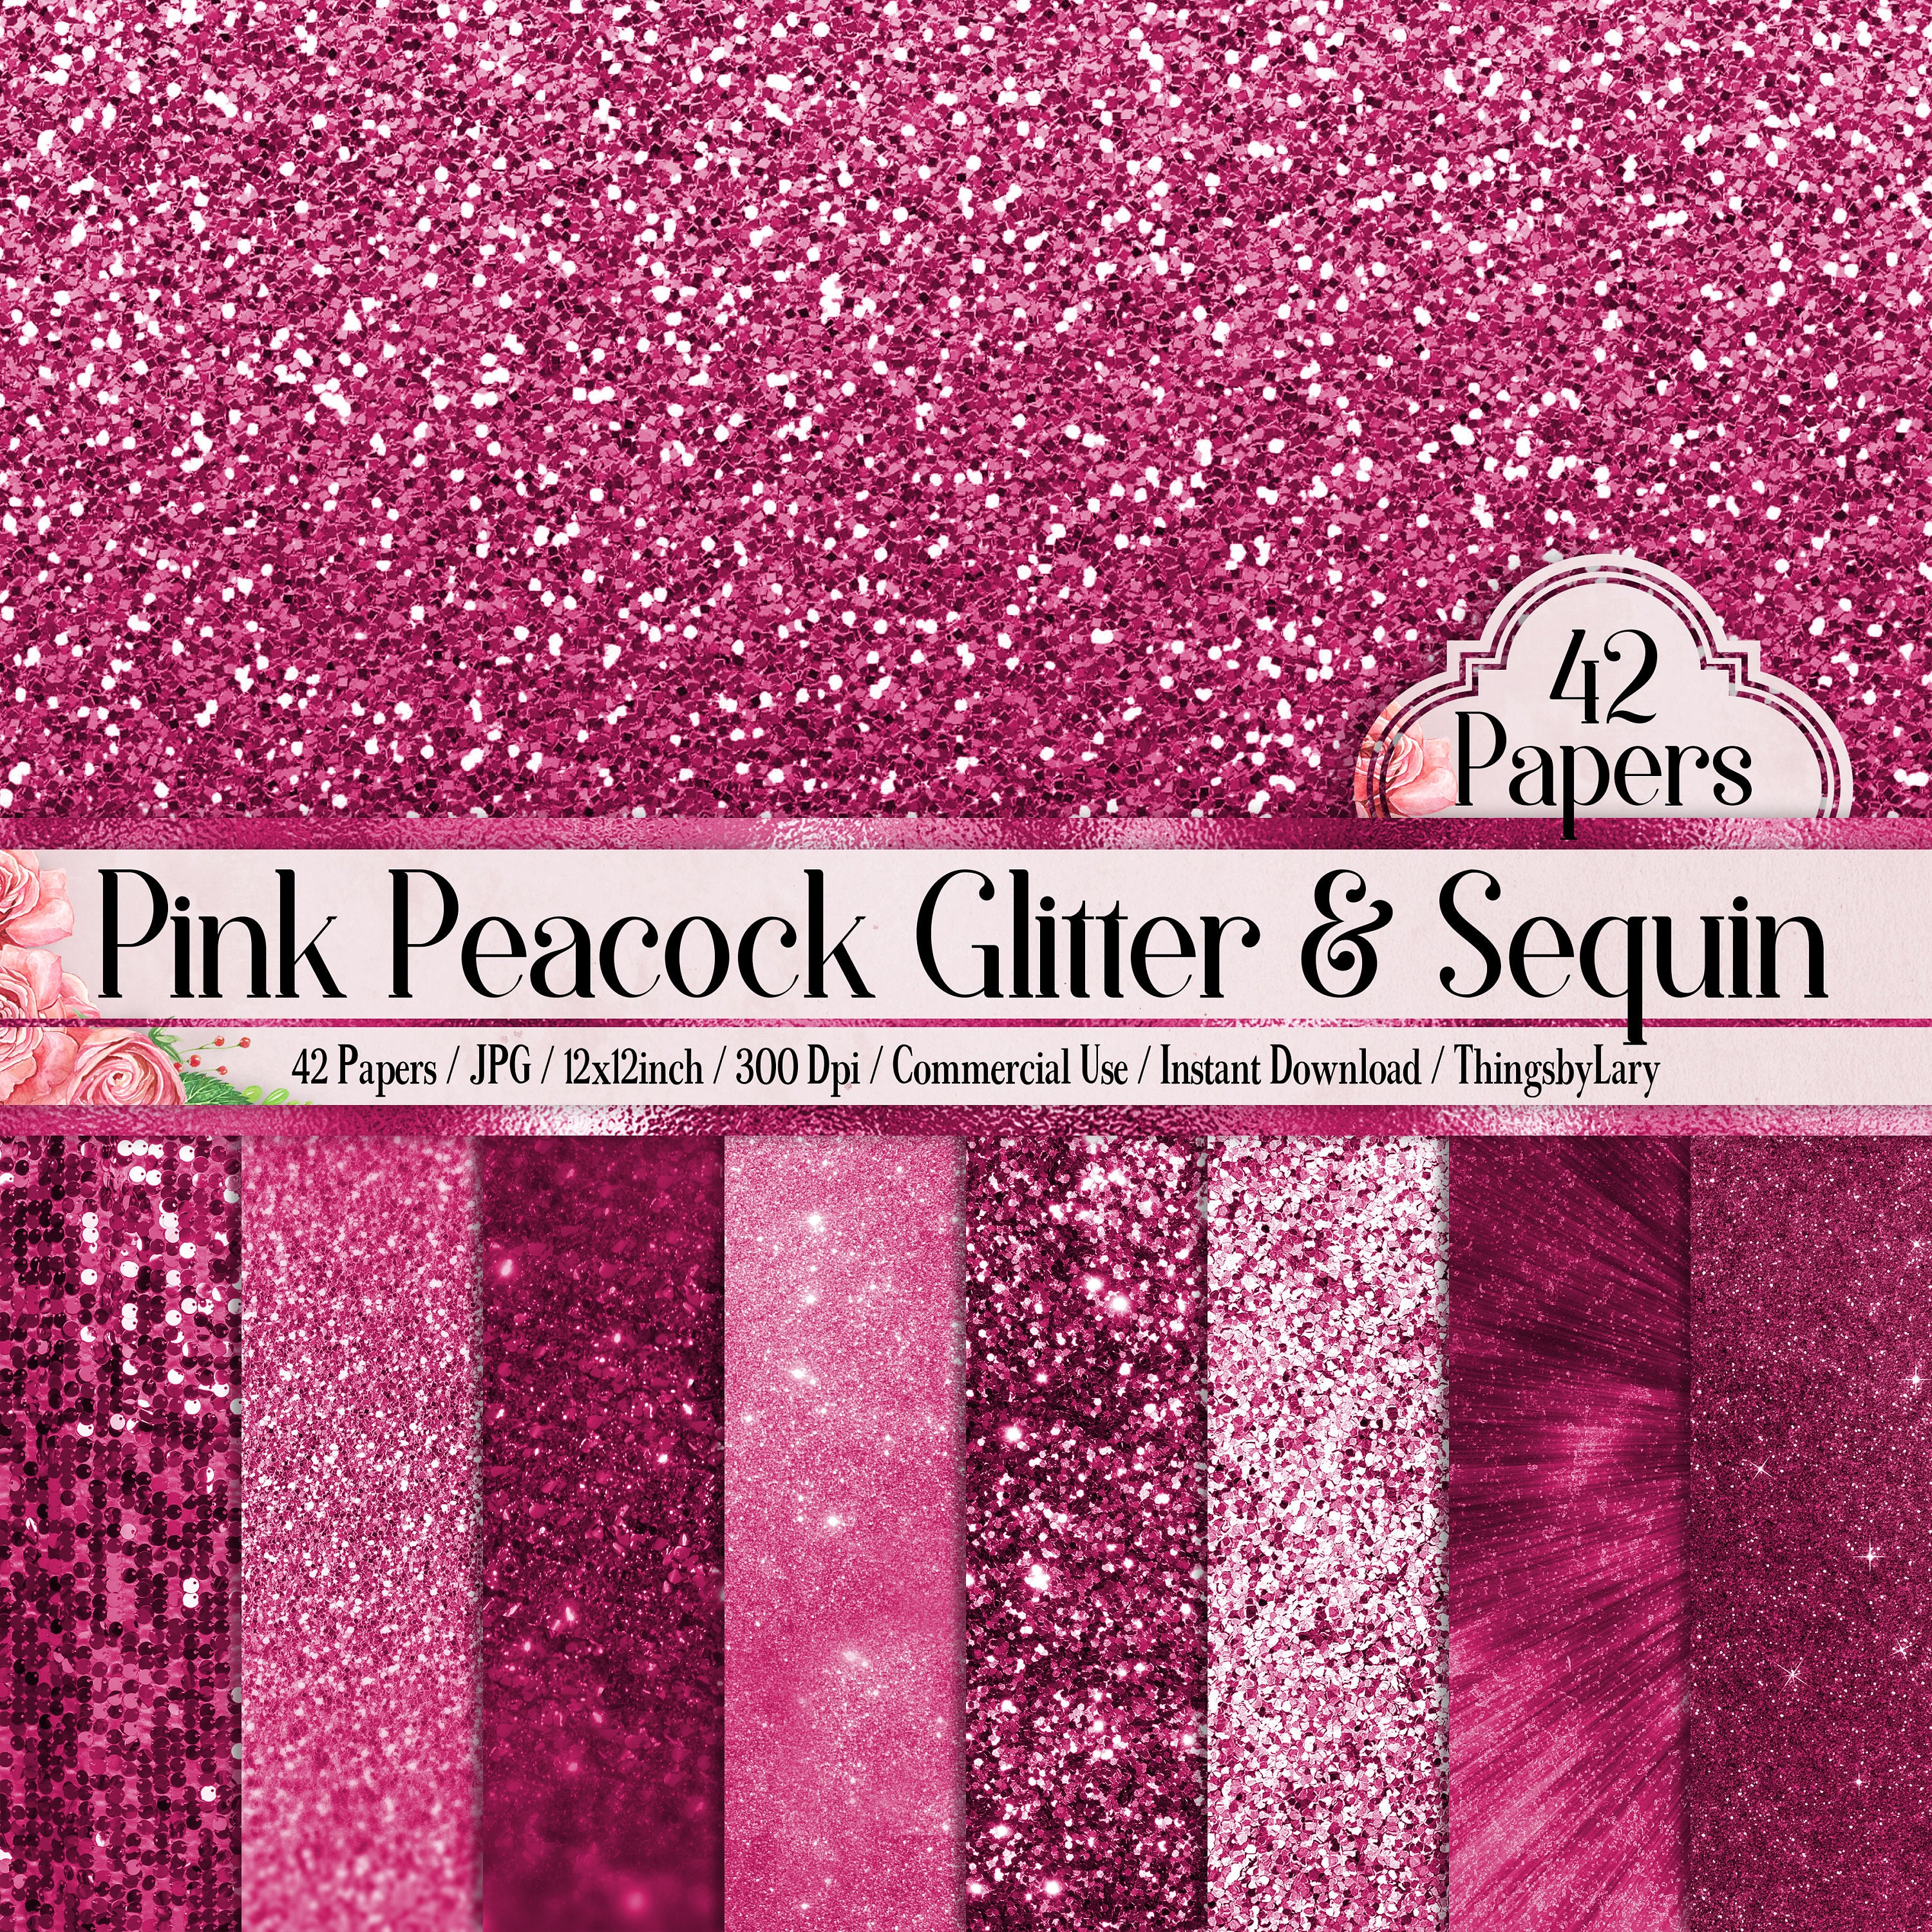 Decoart 2 oz. Craft Twinkles Sparkling Pink Glitter Paint